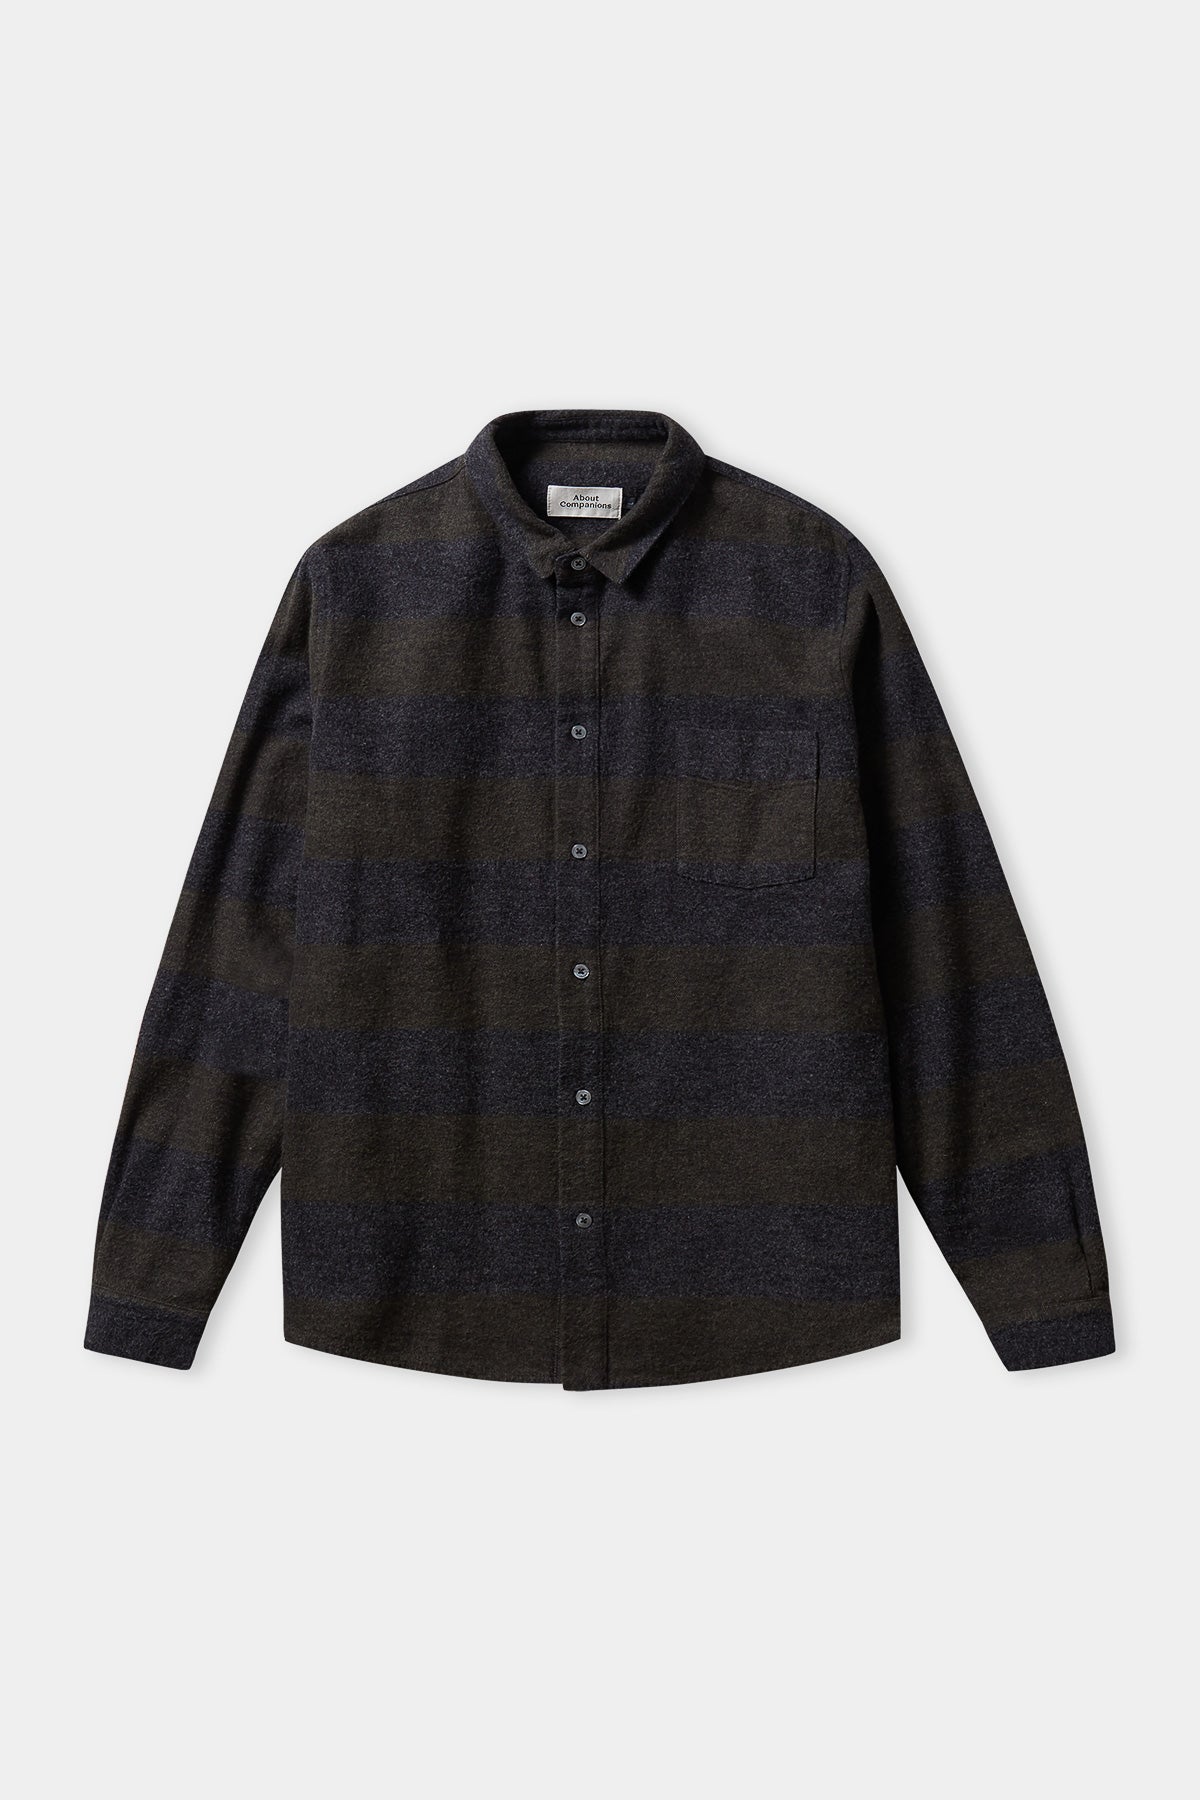 simon shirt, striped coal flannel, herren - about companions